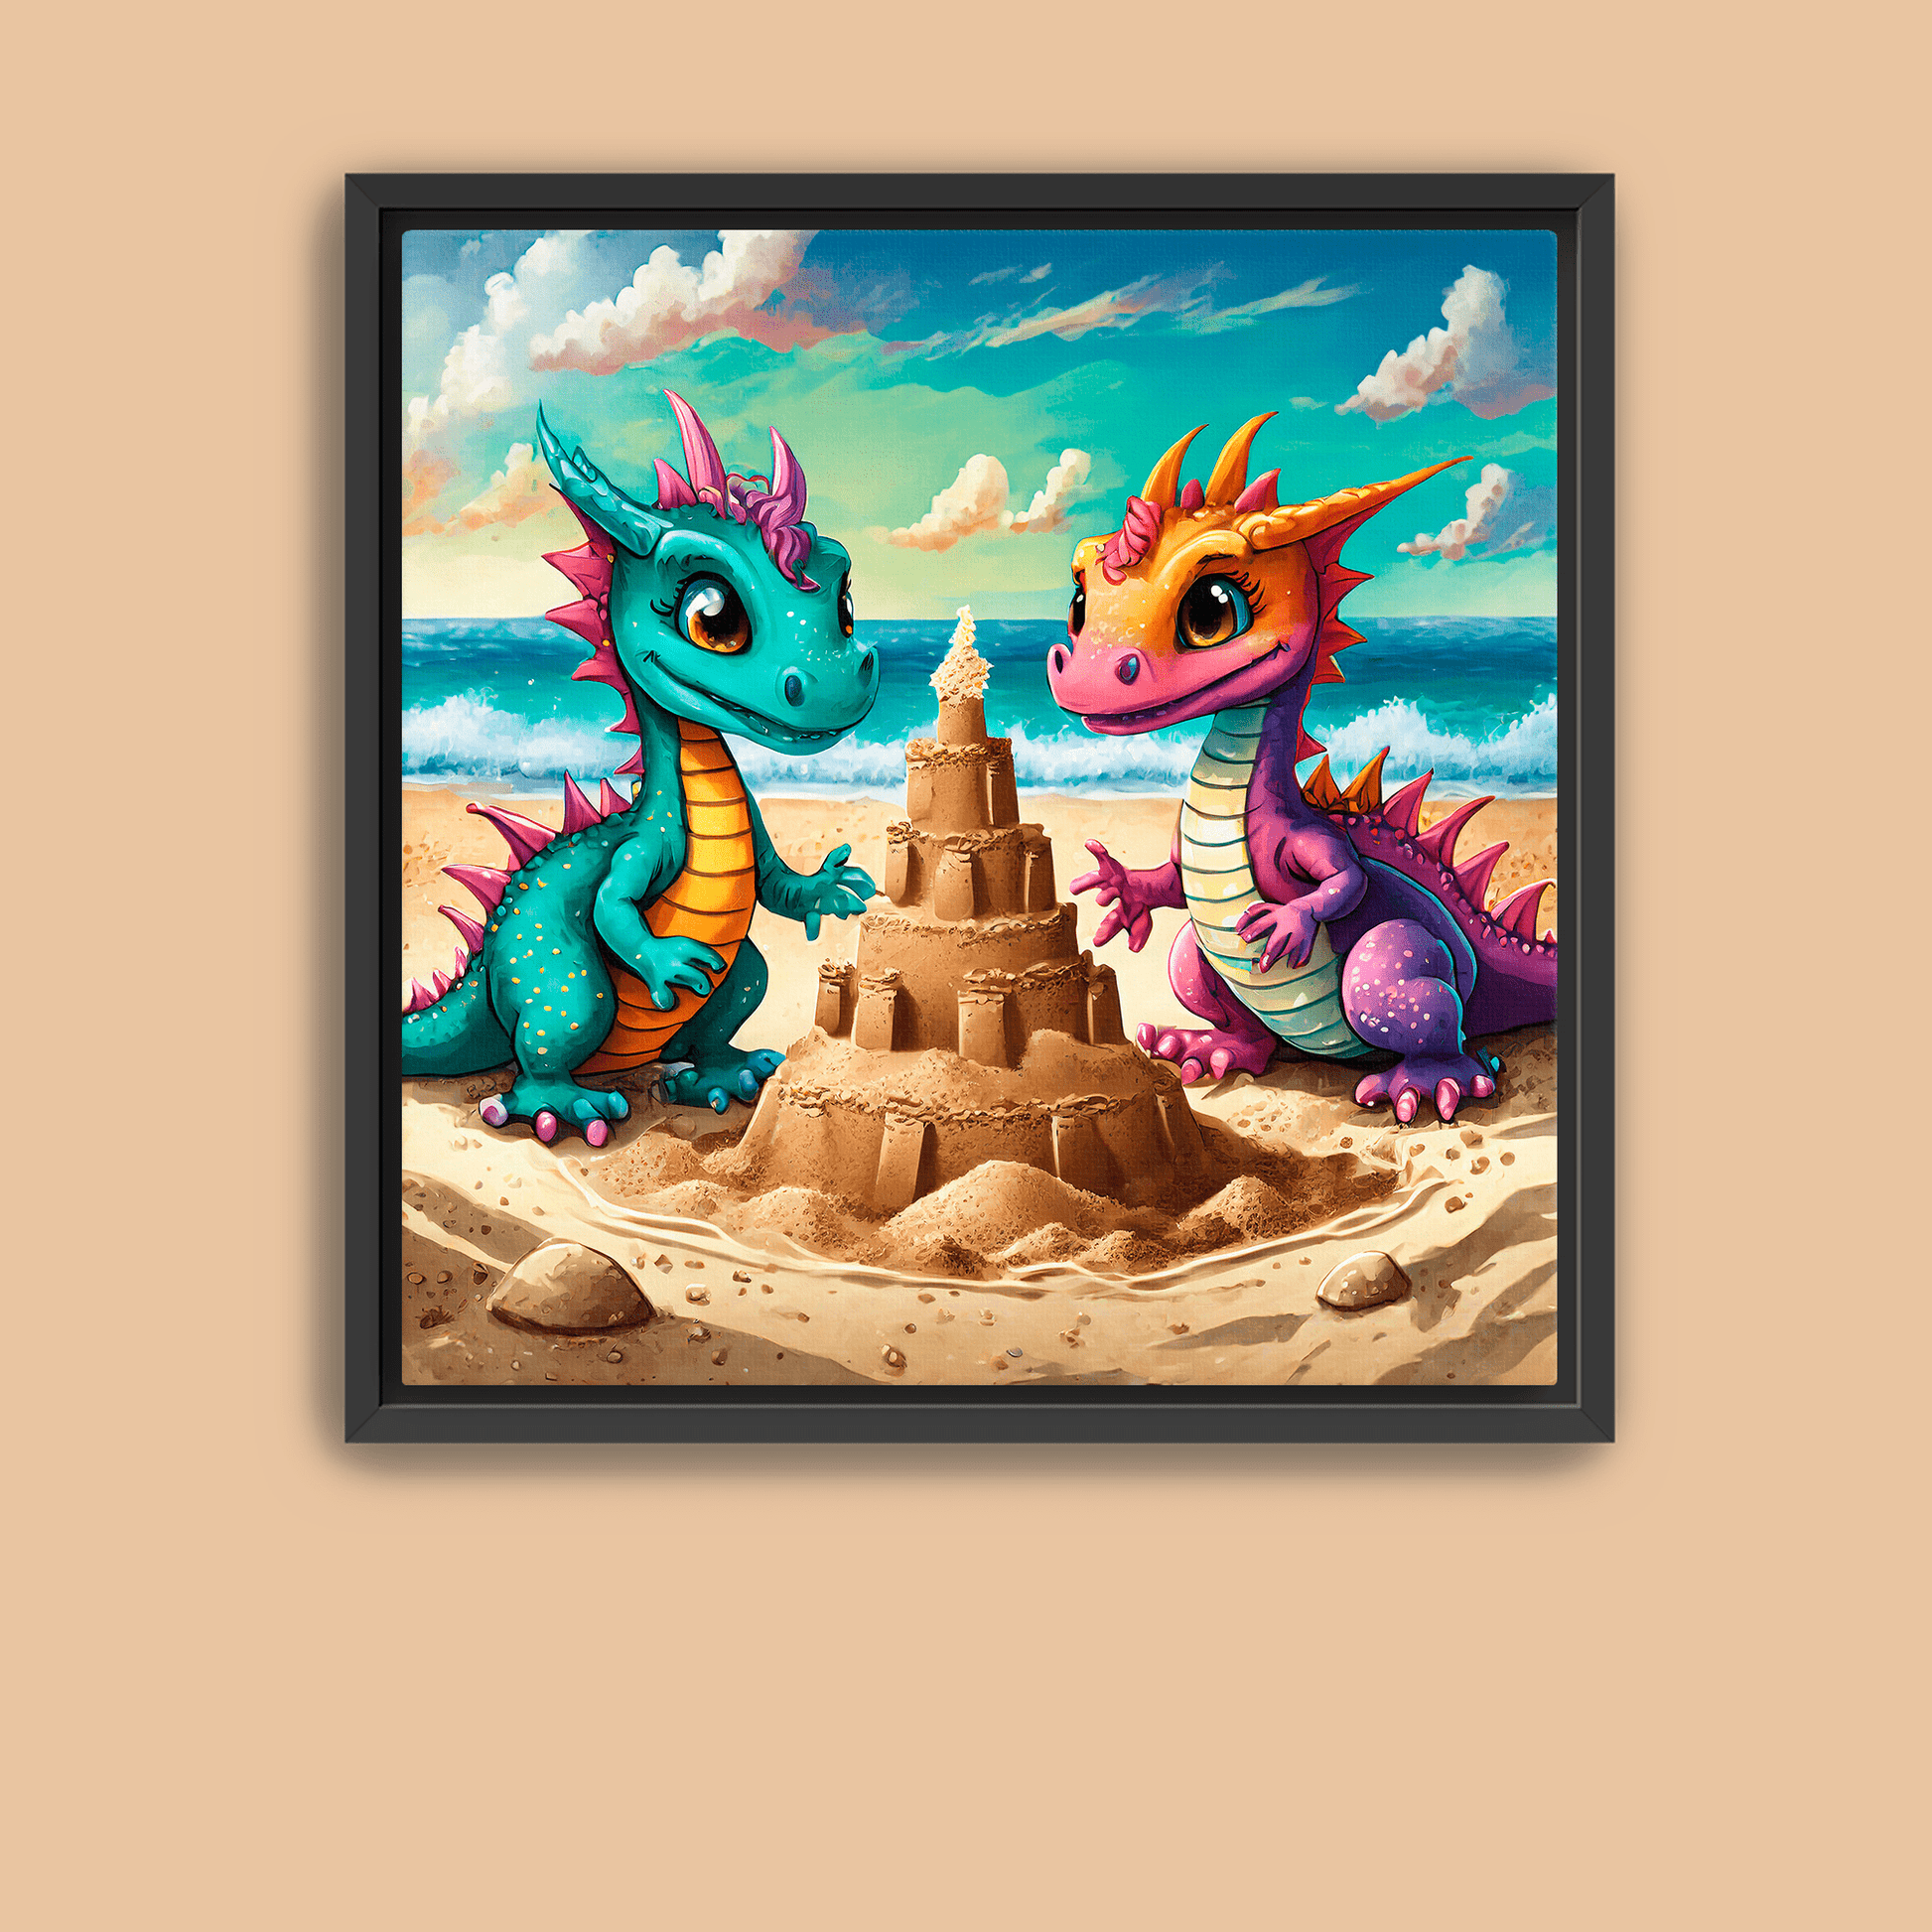 Baby Dragons at the Beach - Canvas Wrap - Premium Canvas Print